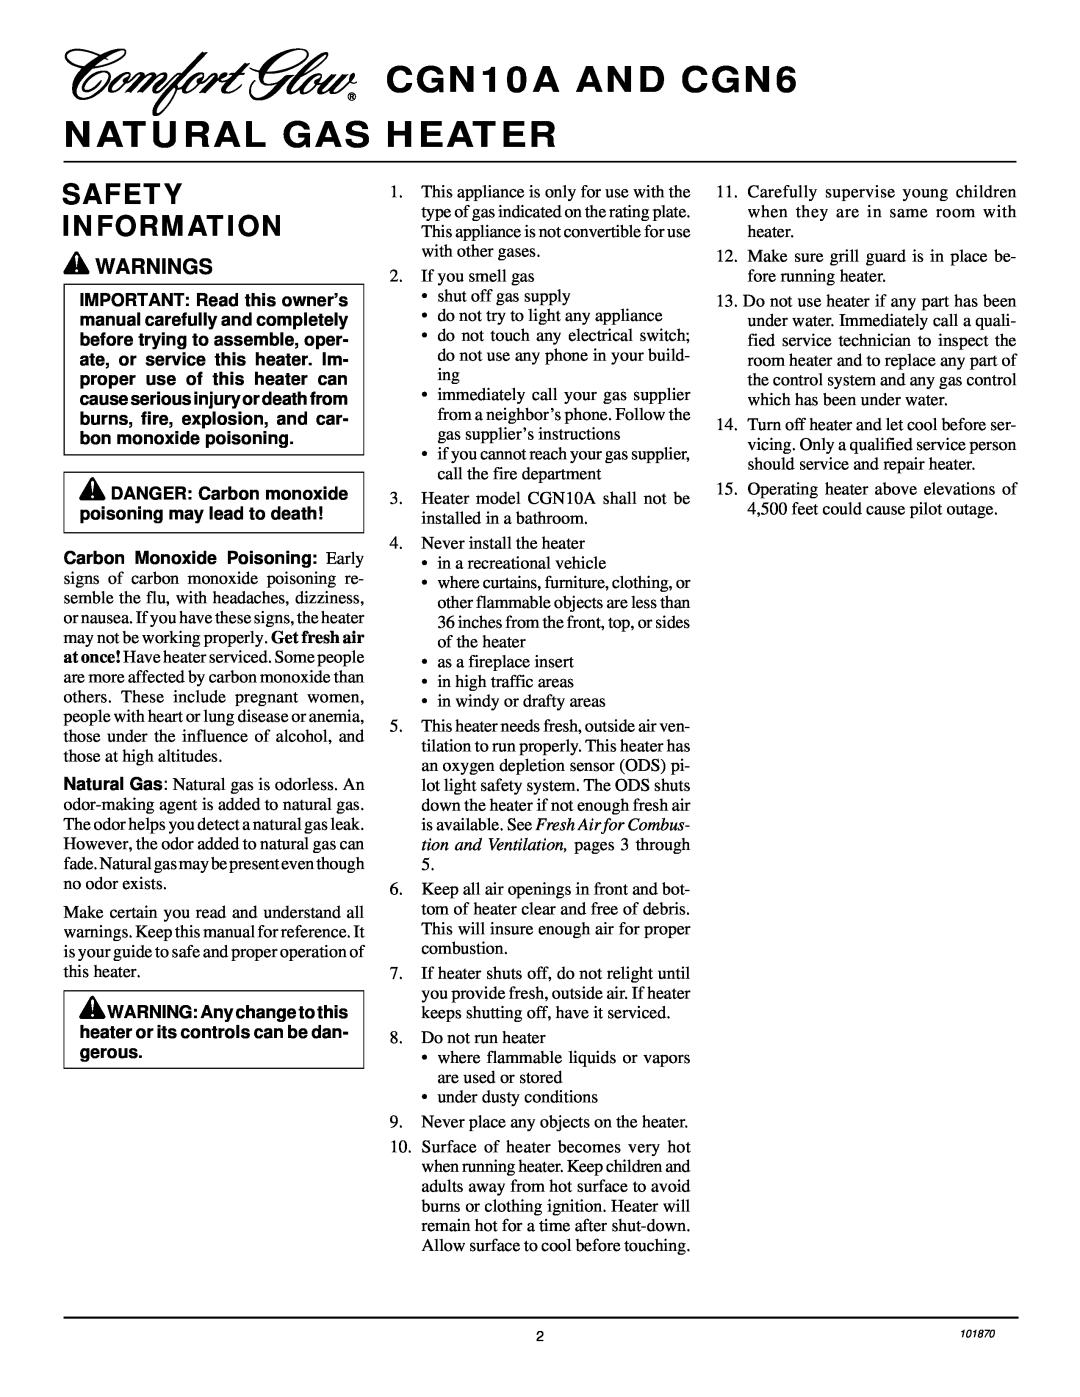 Desa installation manual CGN10A AND CGN6 NATURAL GAS HEATER, Safety Information, Warnings 